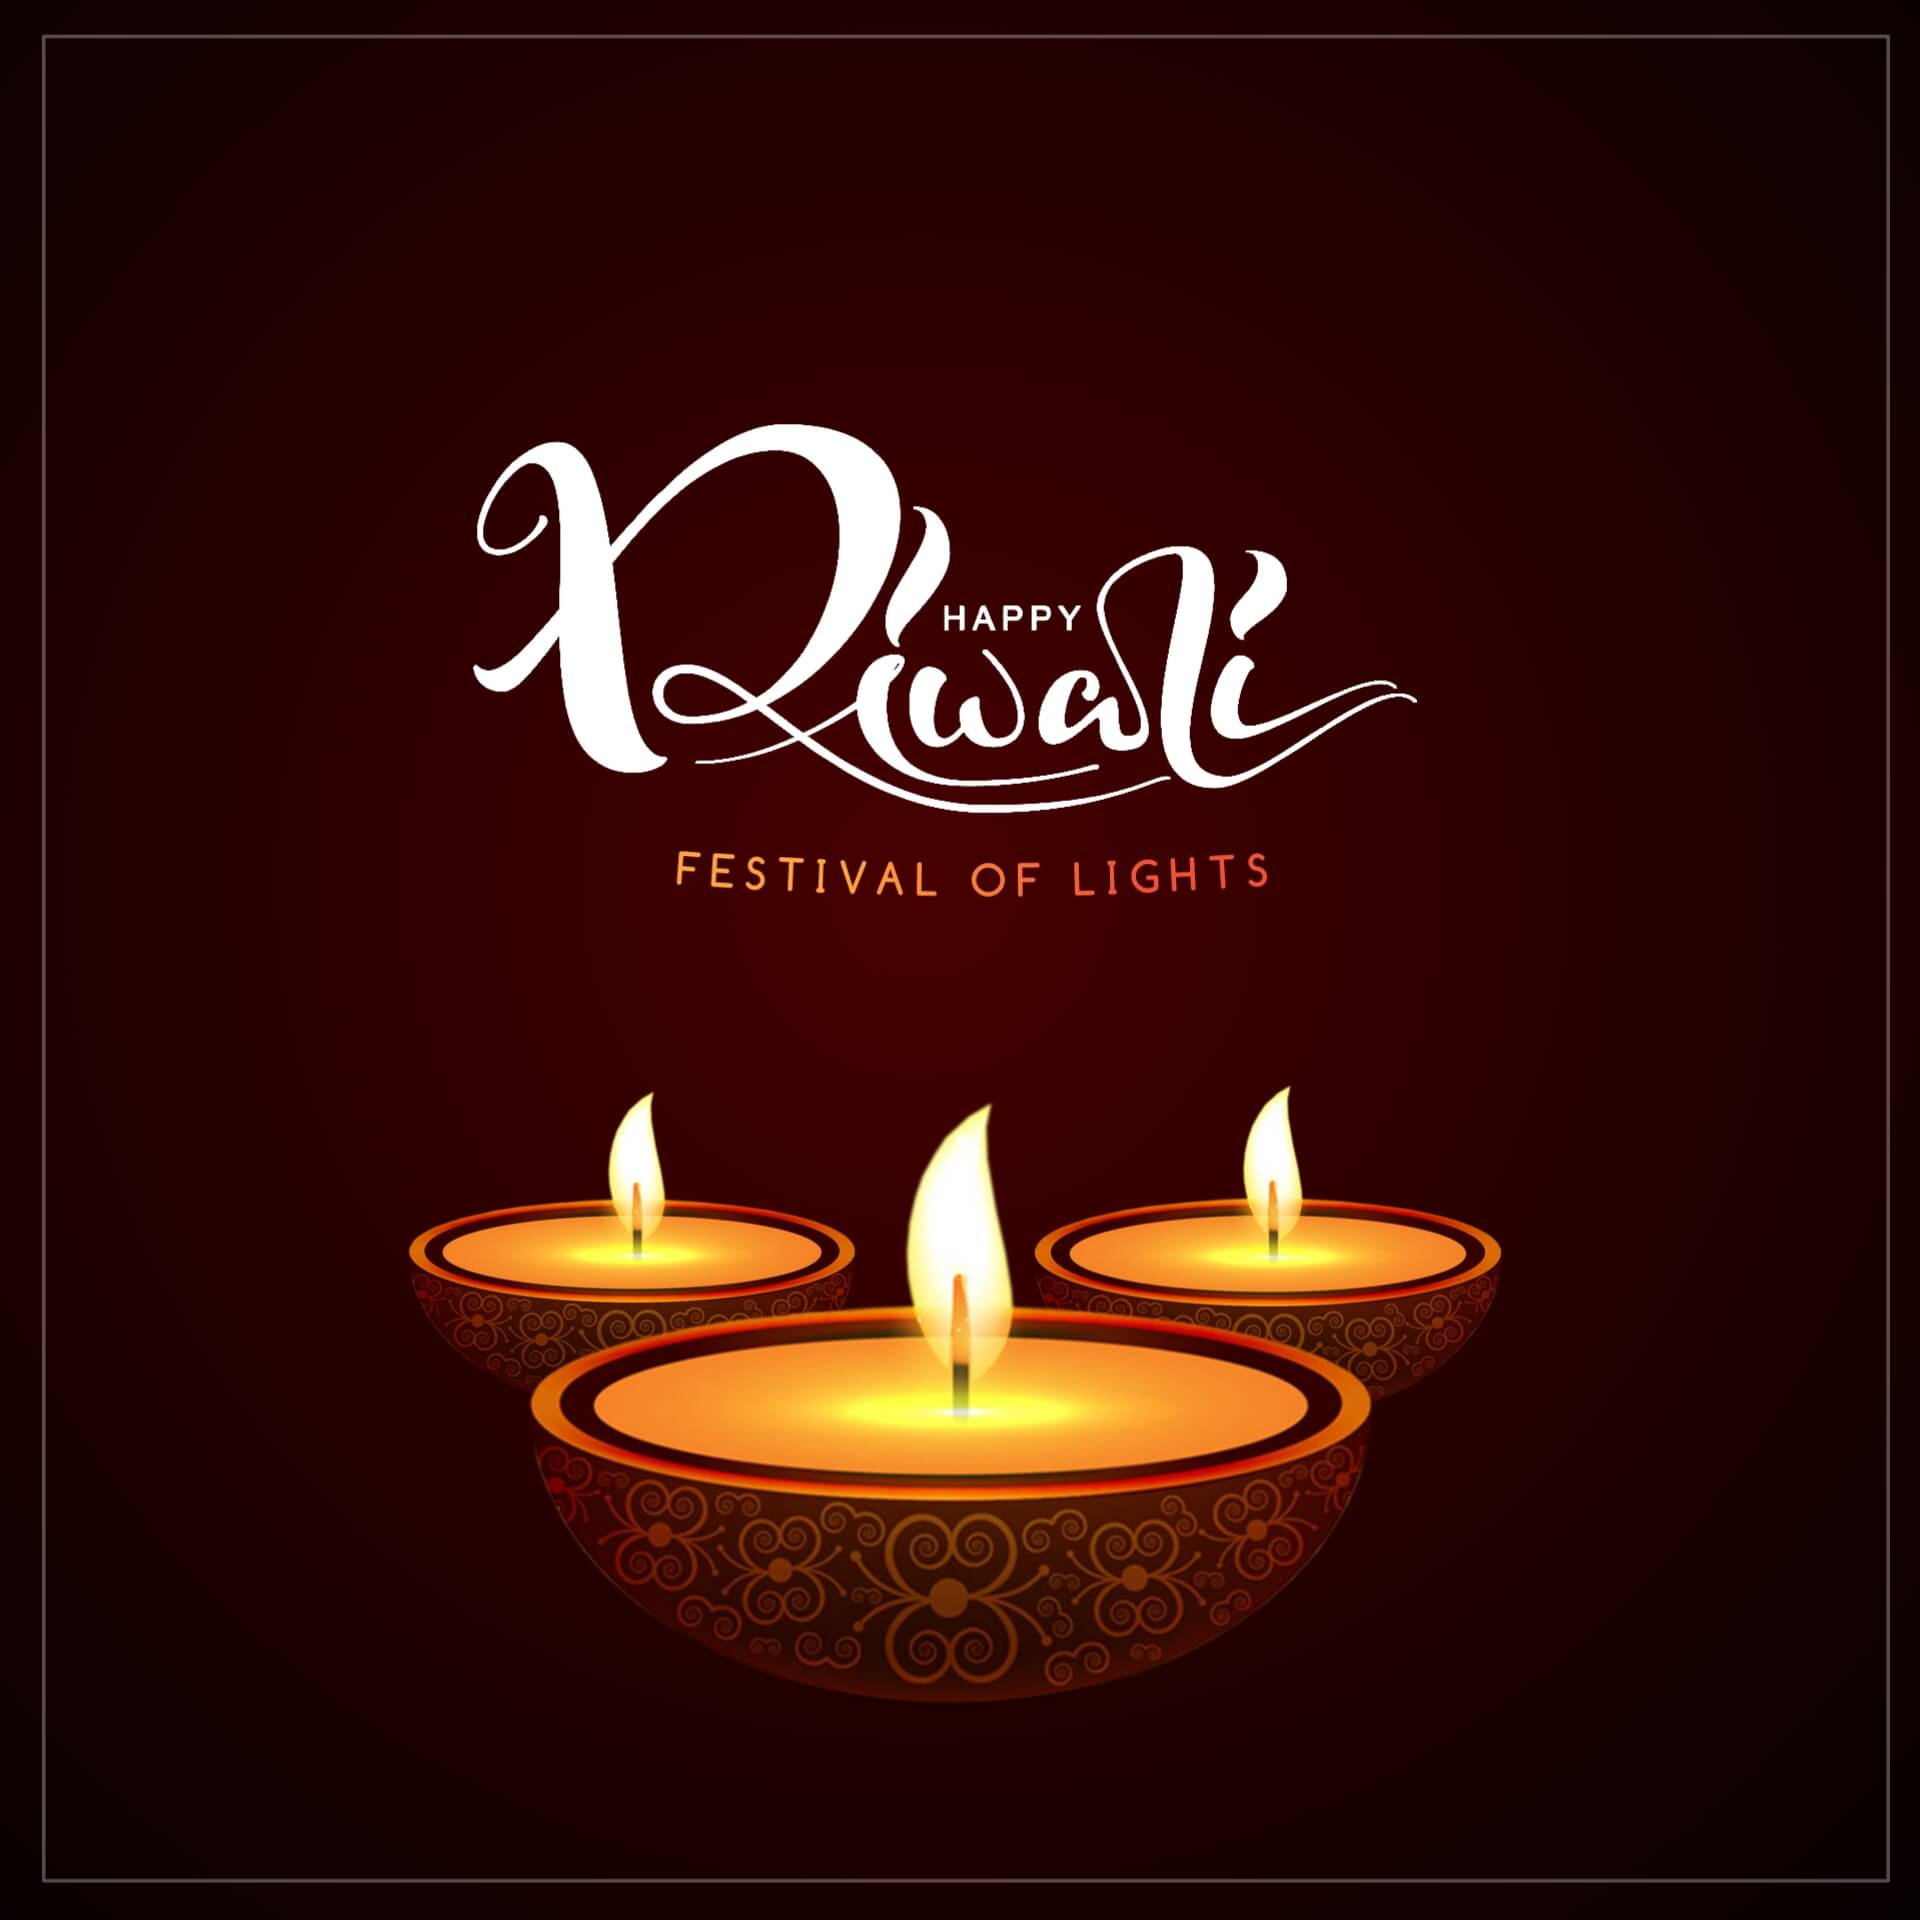 Happy Diwali Image